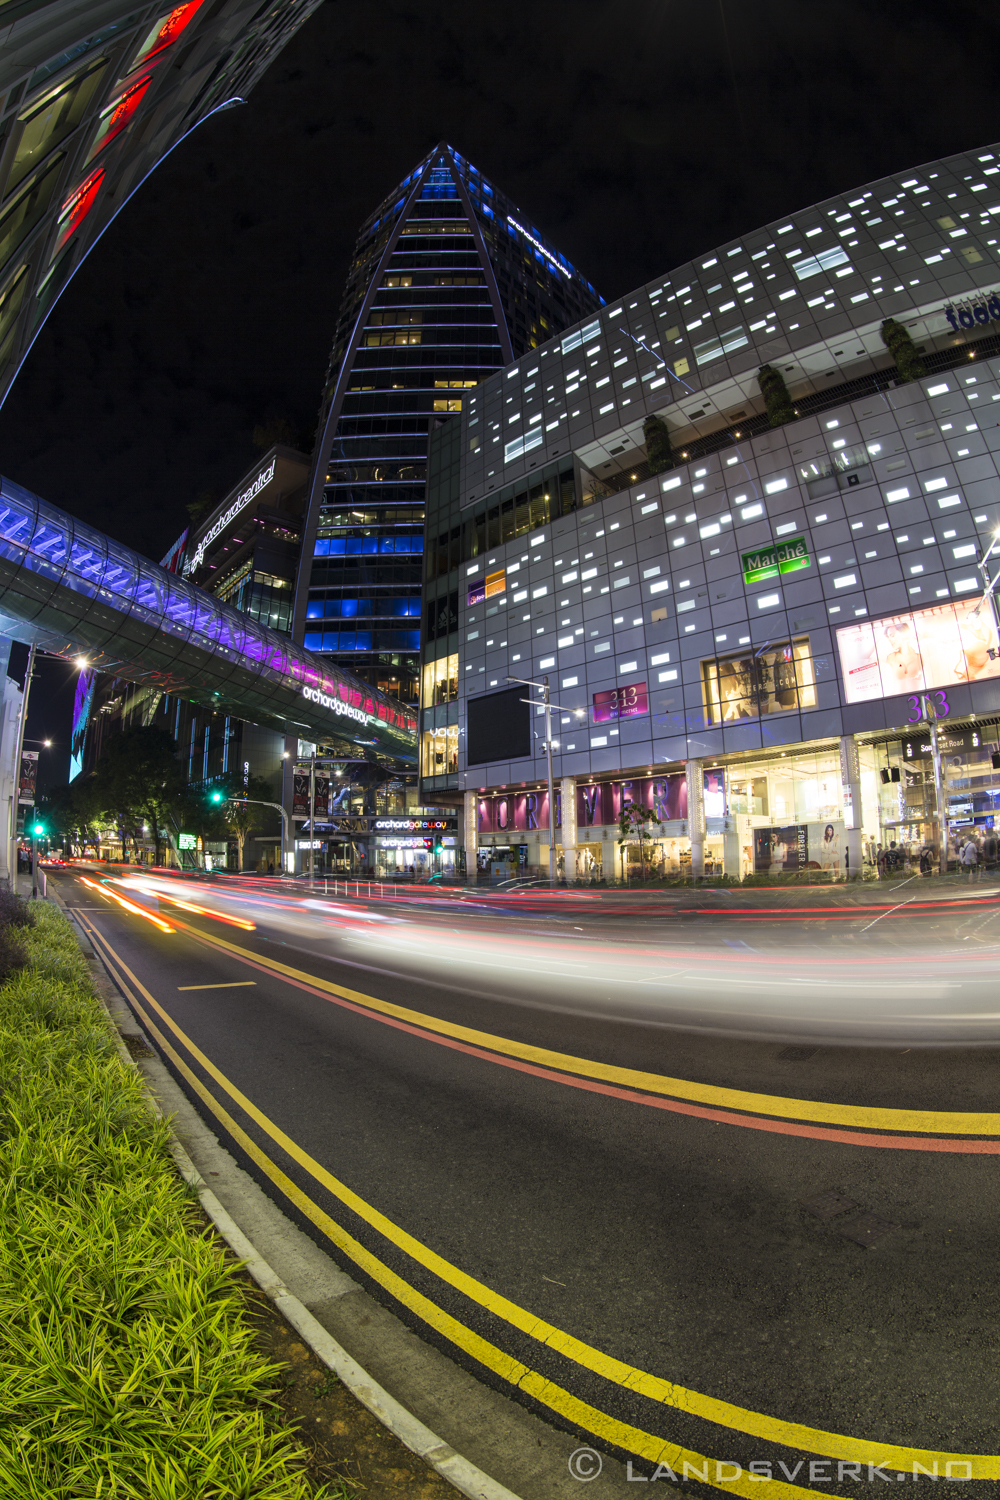 Orchard Road, Singapore. 

(Canon EOS 5D Mark III / Canon EF 8-15mm f/4 L USM Fisheye)